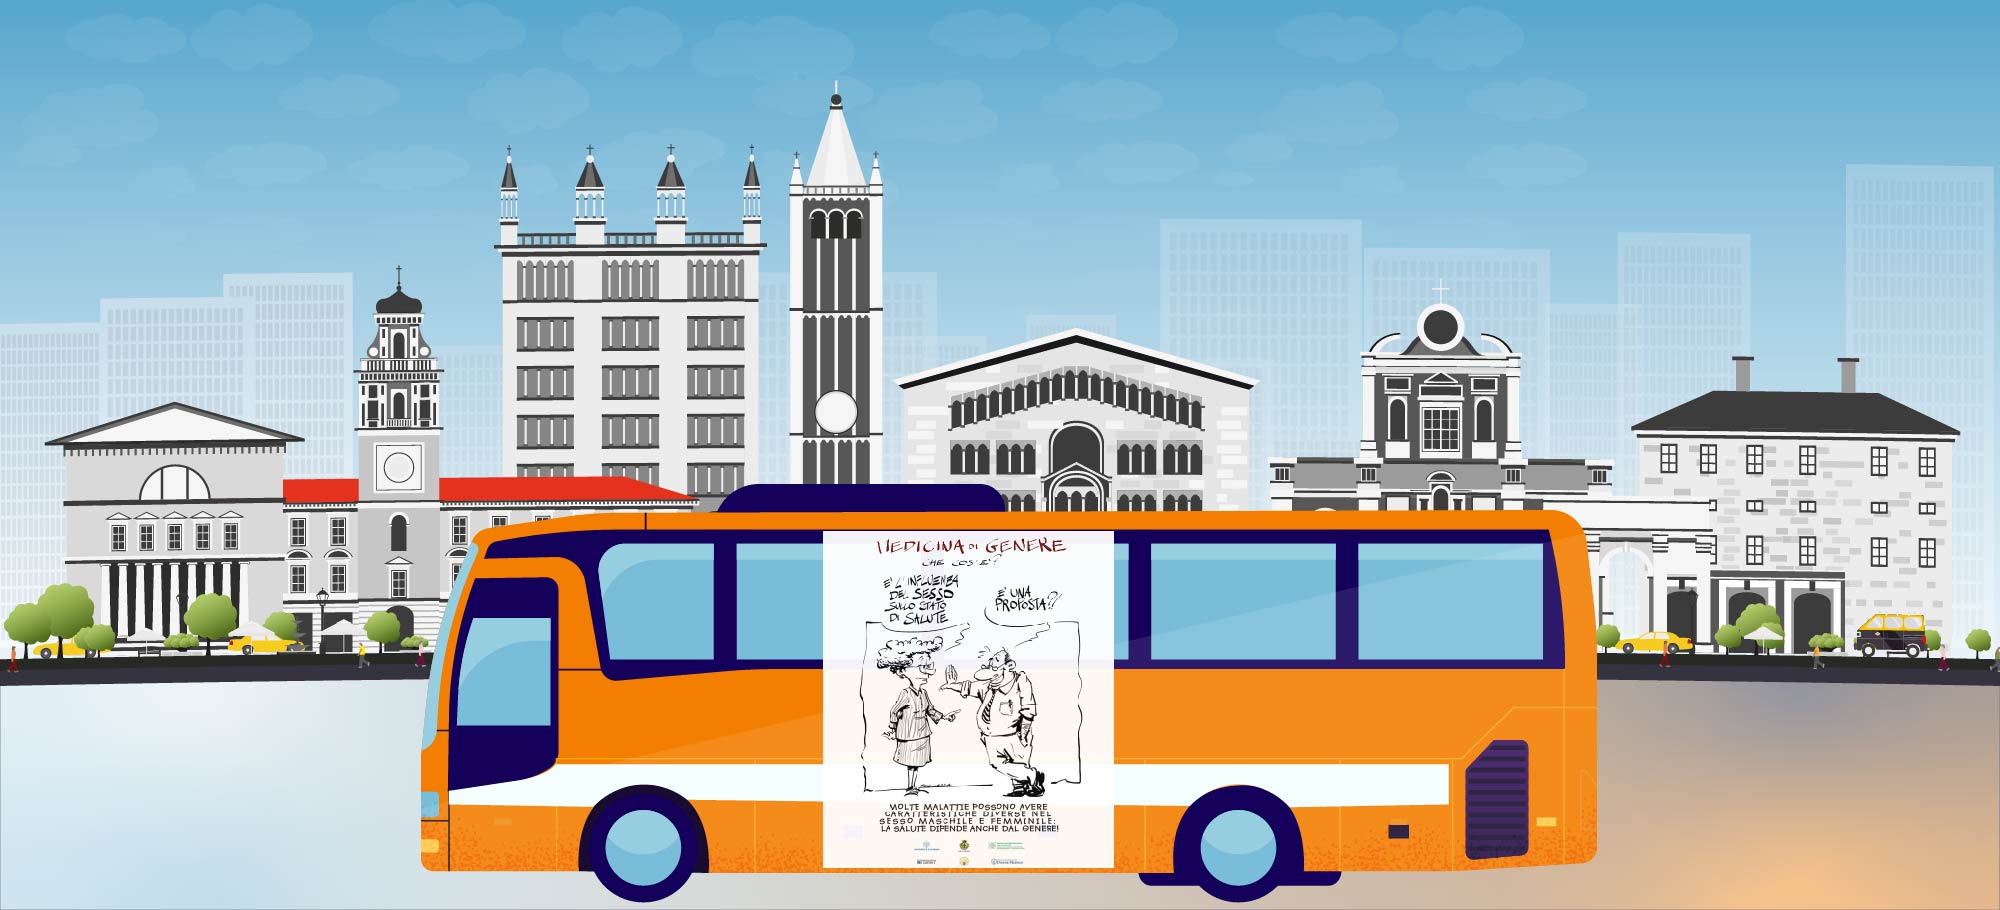 Parma autobus Medicina di Genere_Tavola disegno 1.jpg